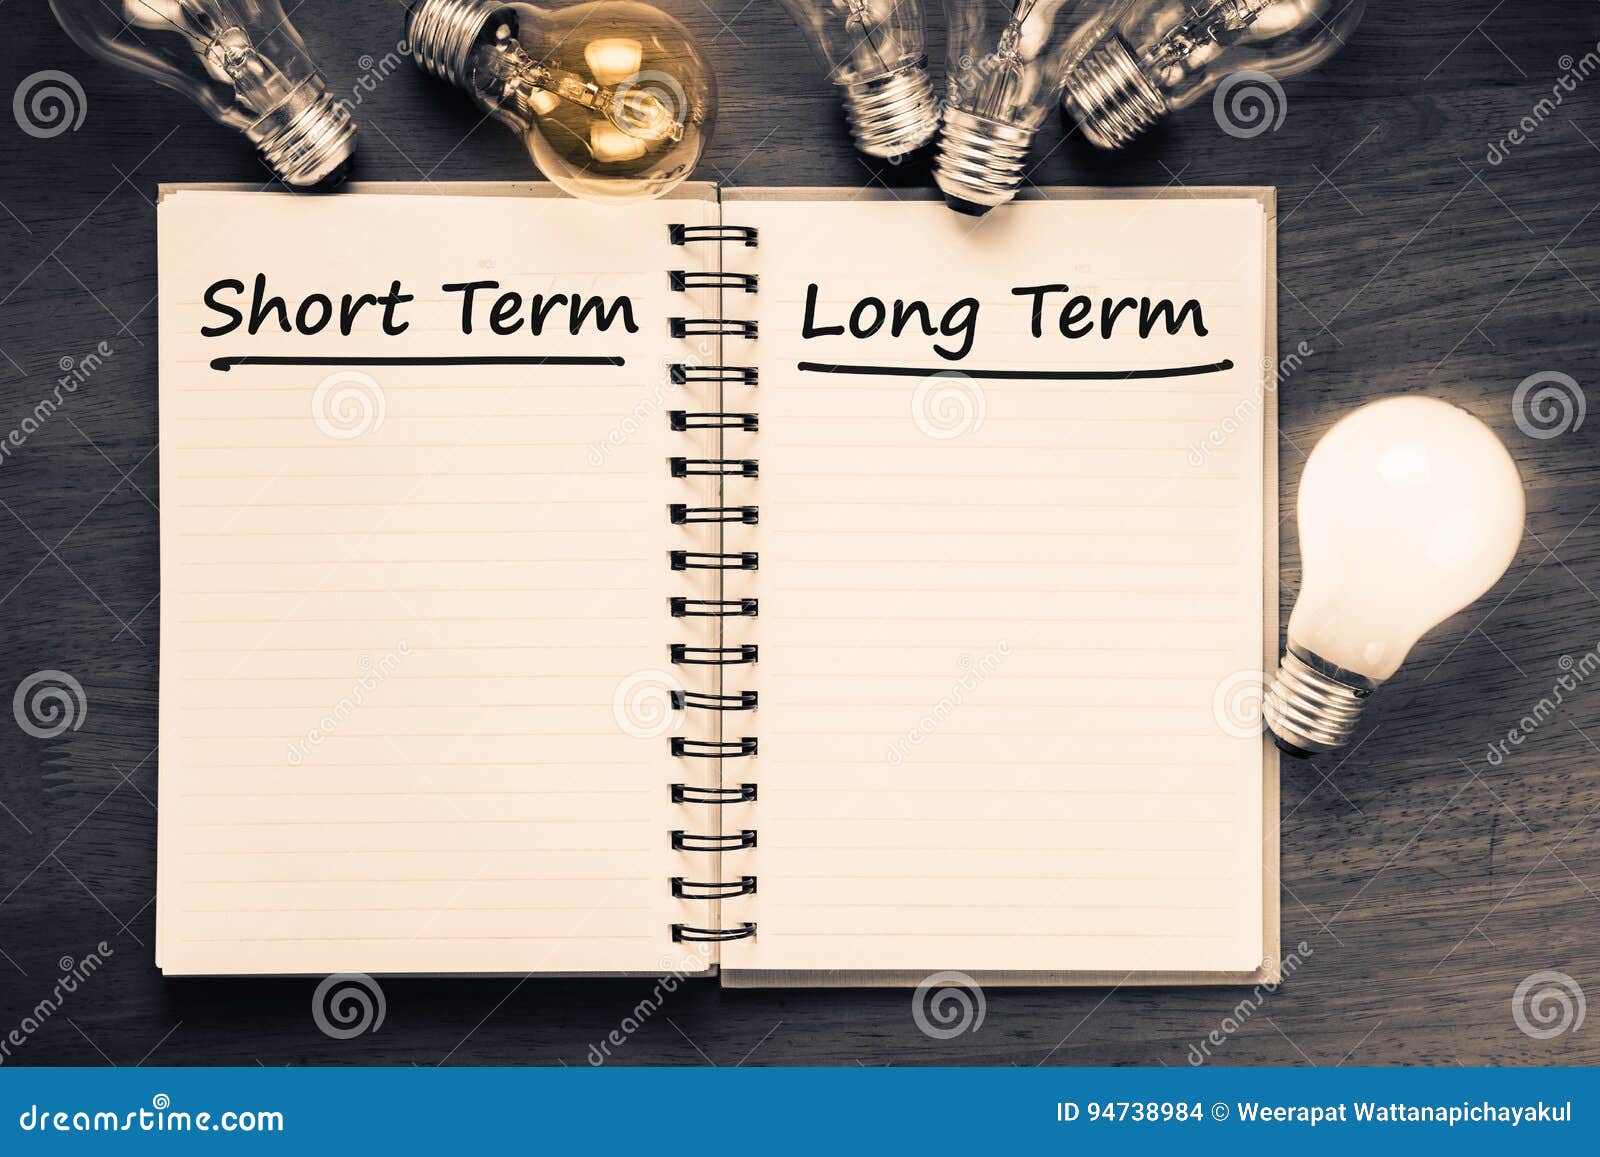 short and long term plan